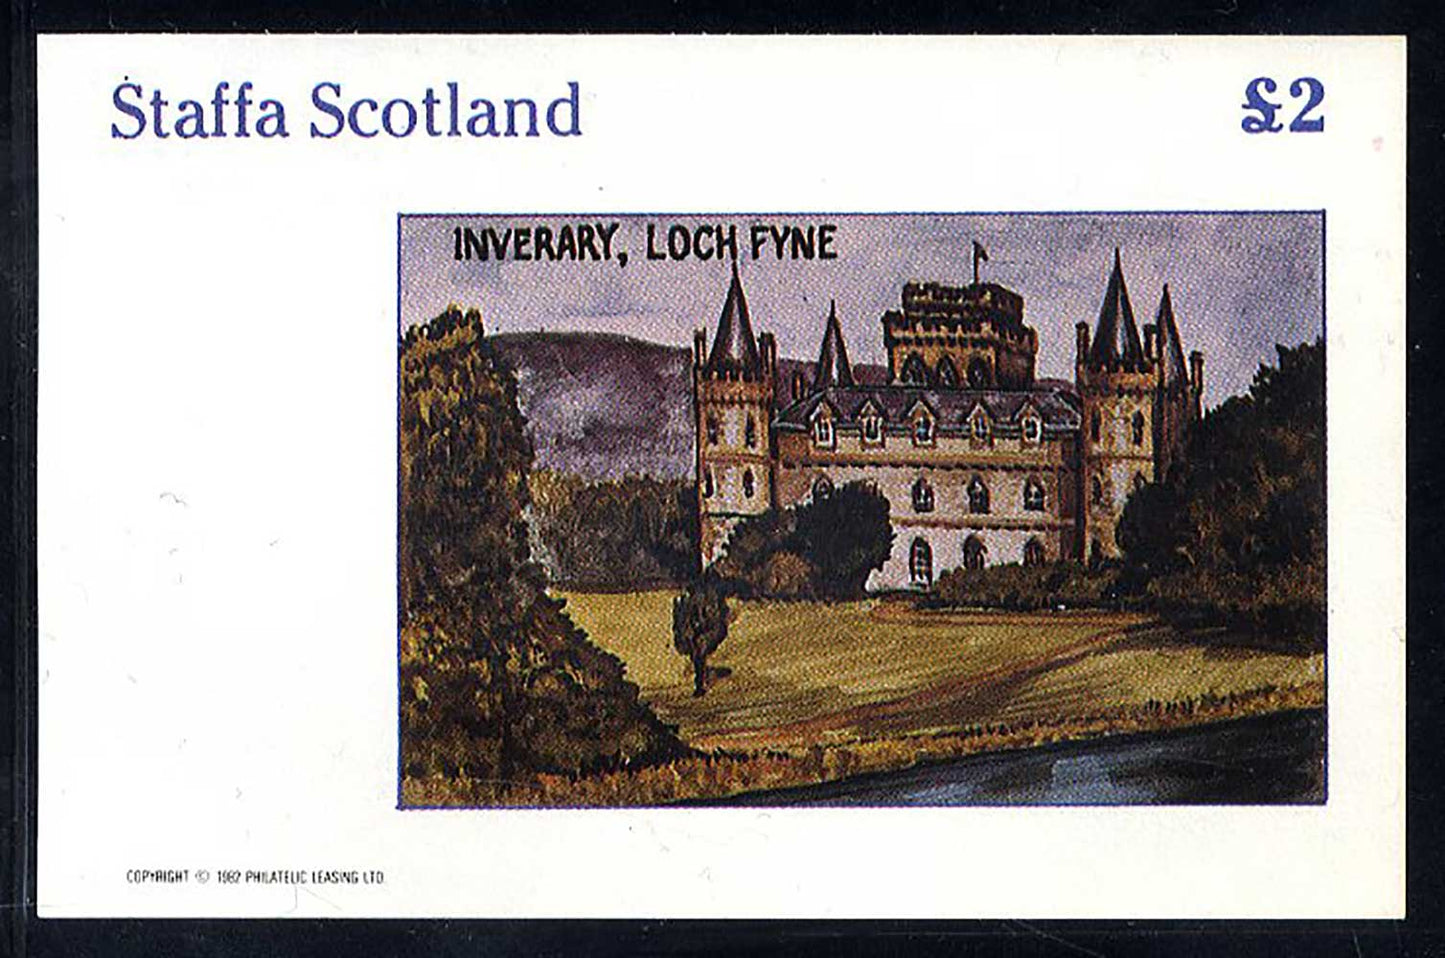 Staffa Scottish Castles £2